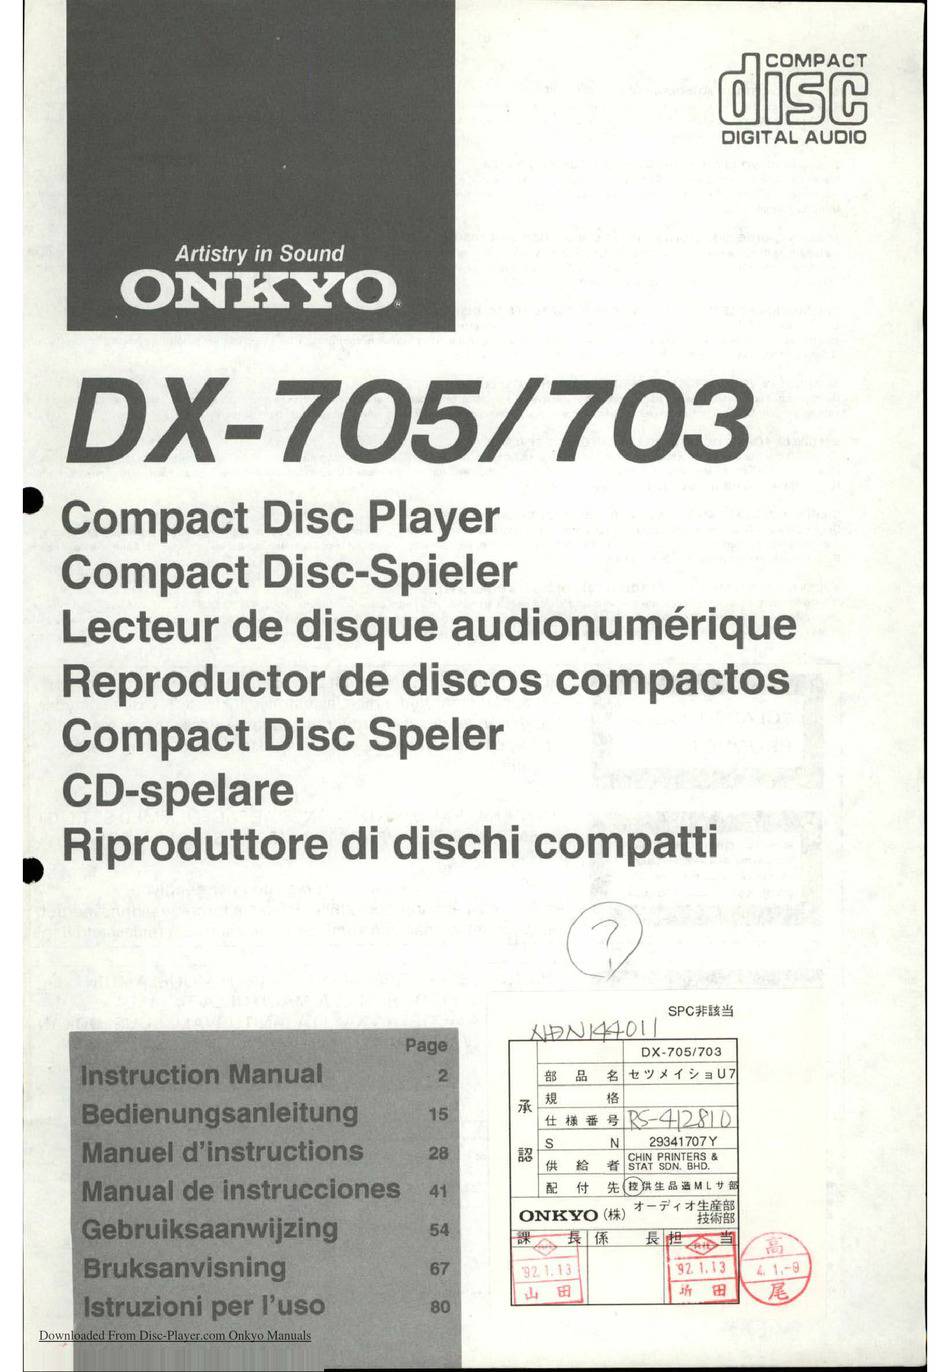 Onkyo DX-705